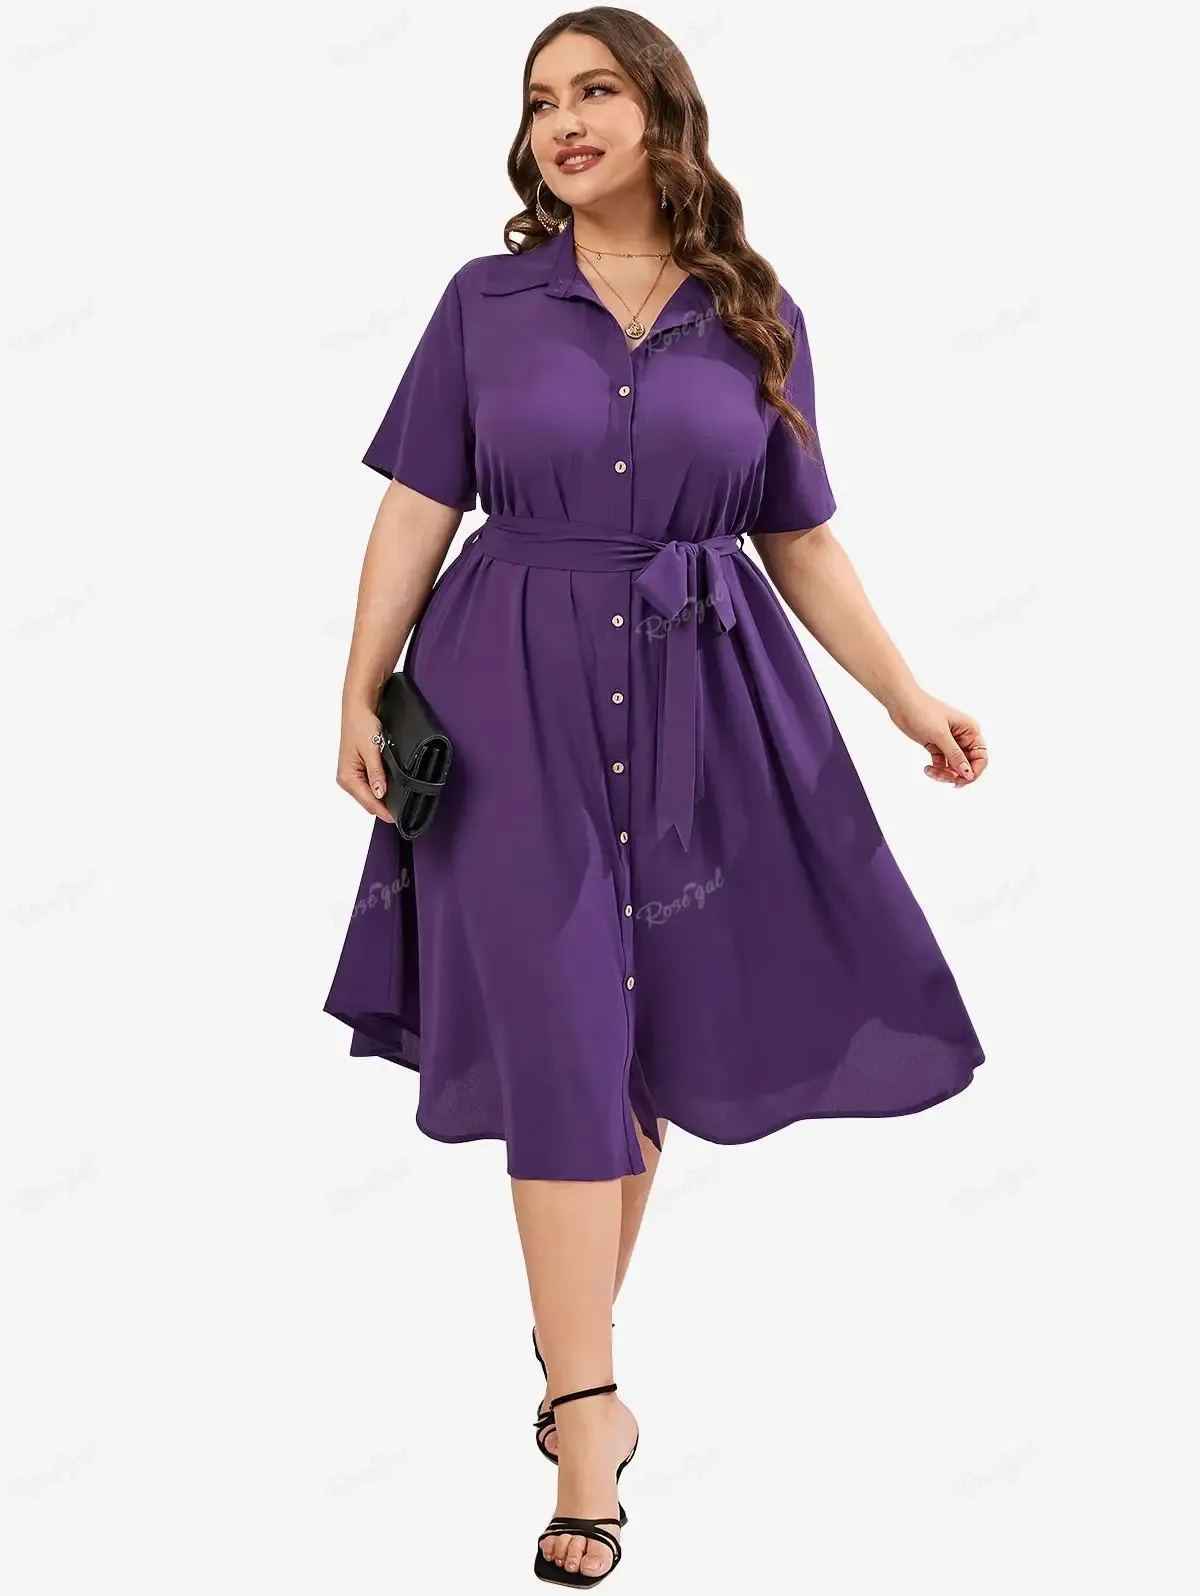 Dresses Rosegal Plus Size Pockets Belt Shirt Dress for Women Summer High Waist Short Sleeves Casual Midi Vestidos Aline Dresses Purple